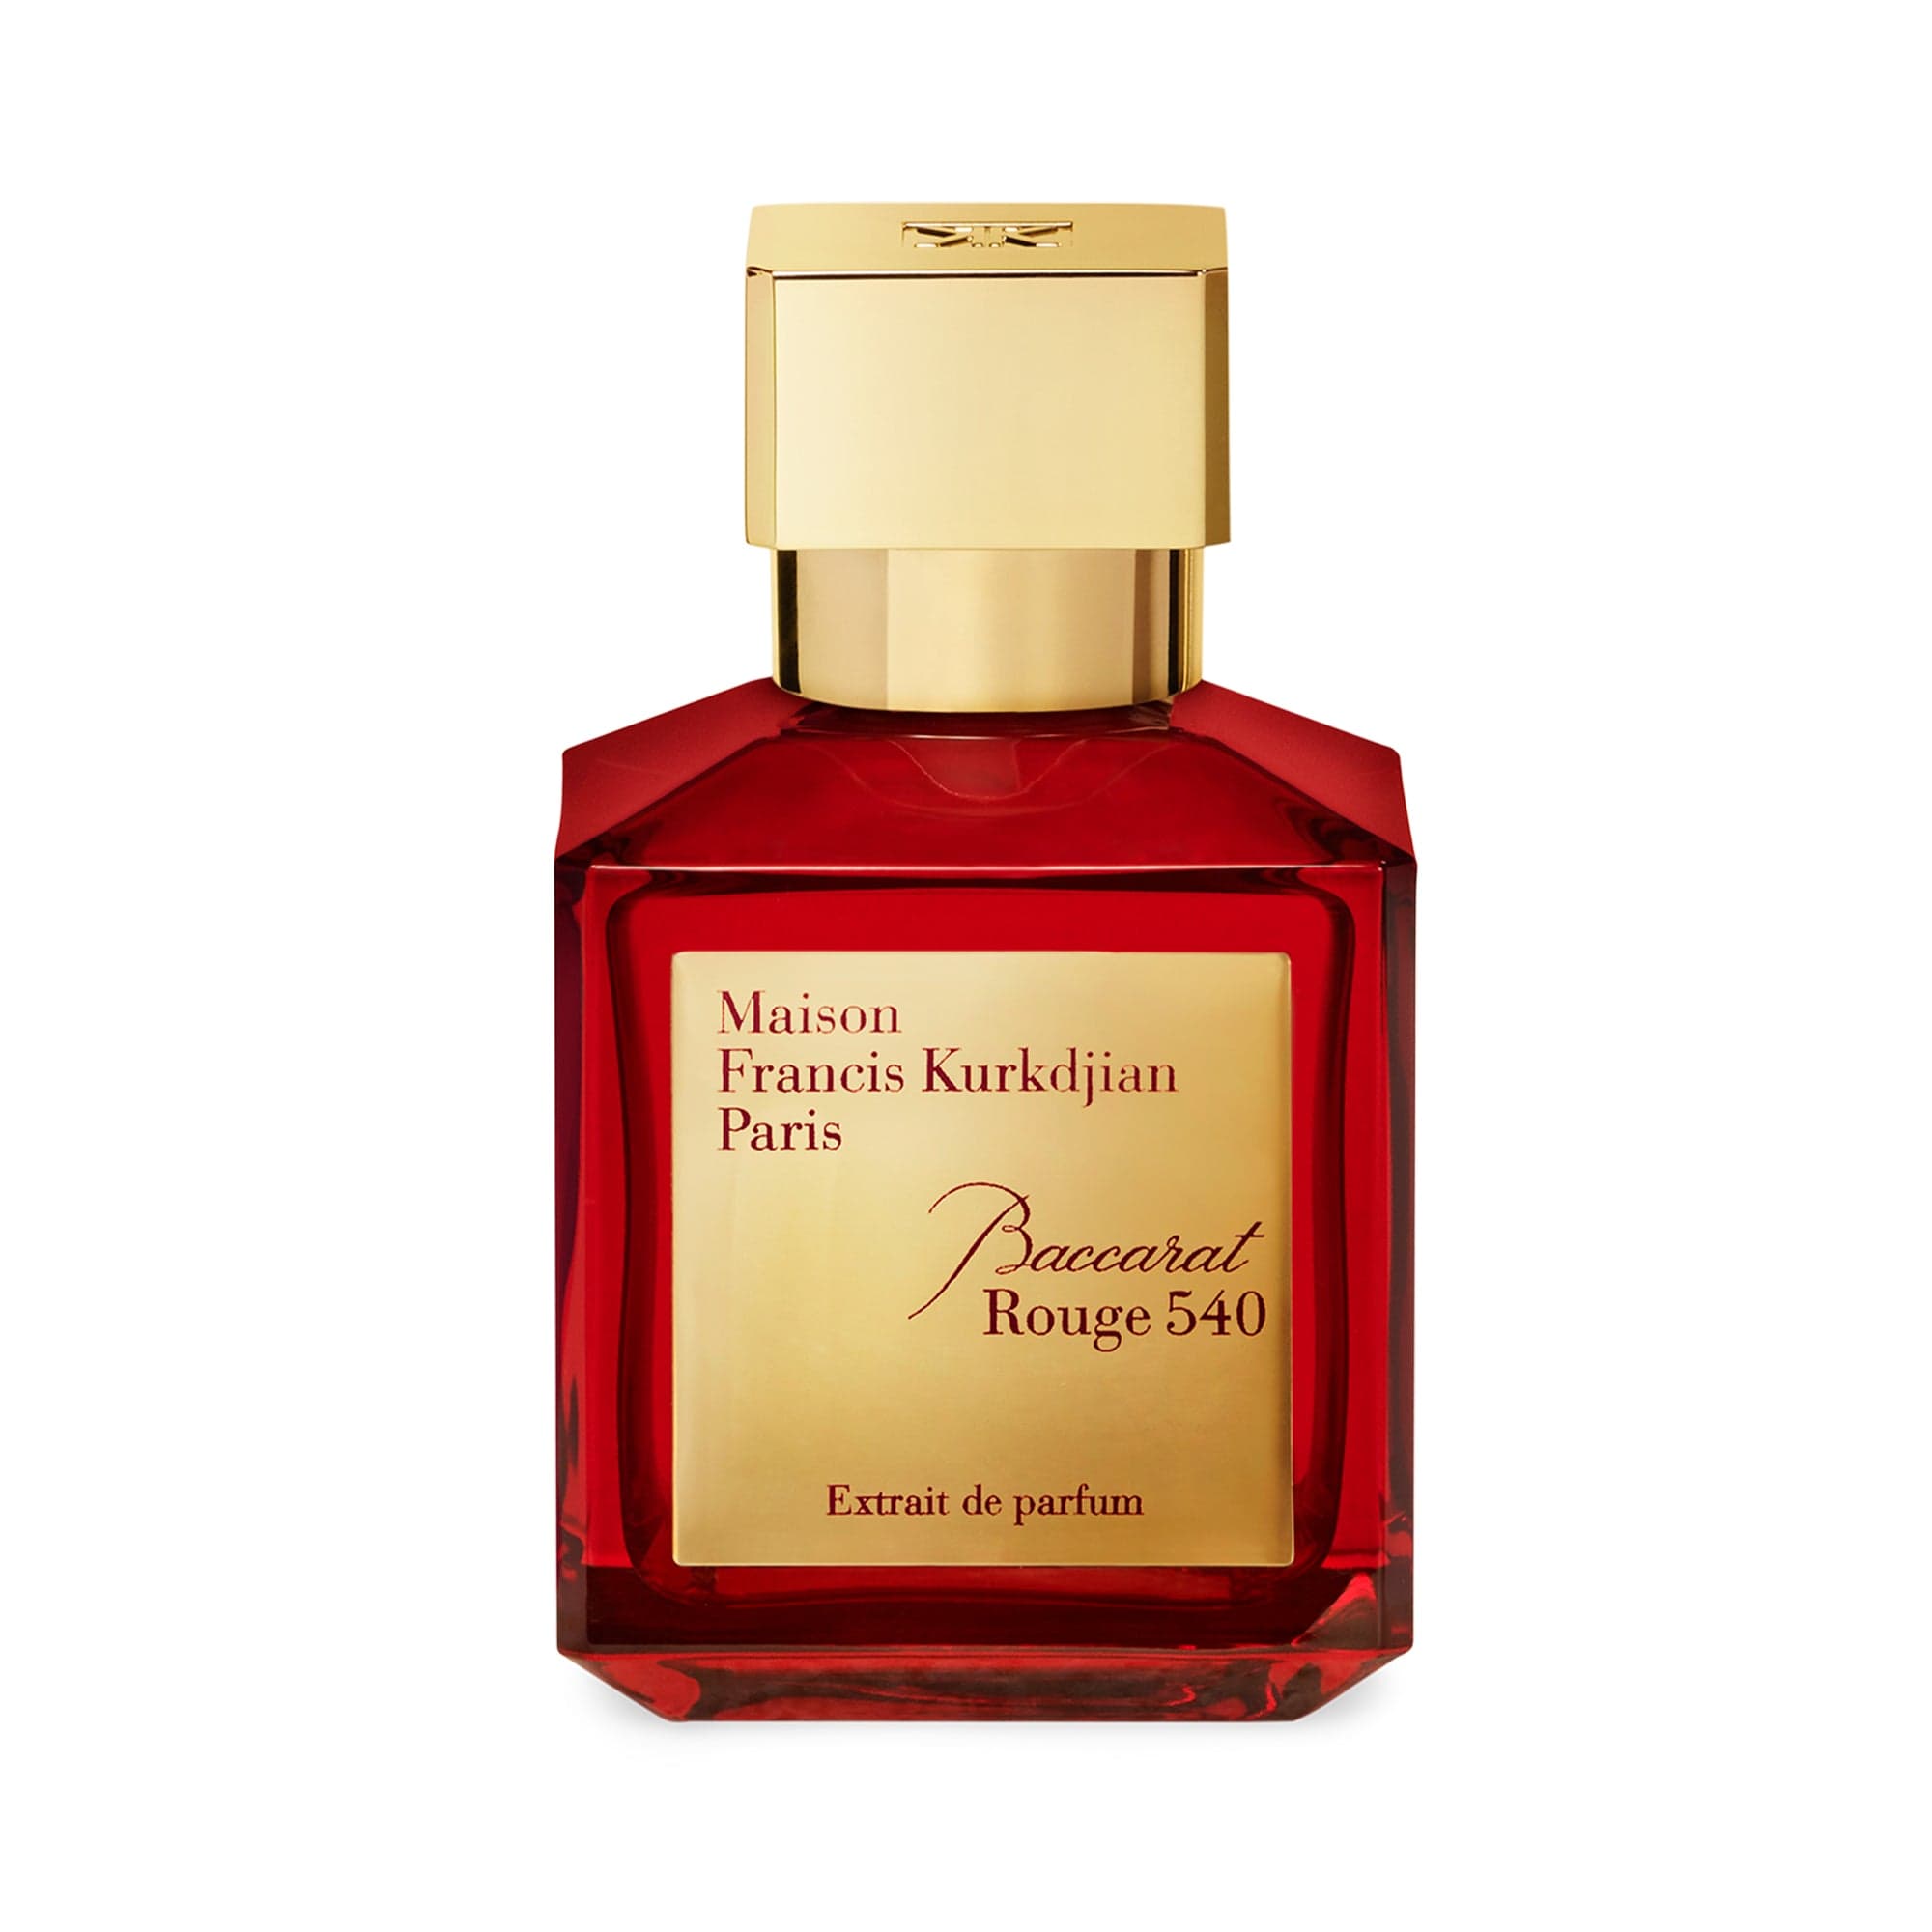 Baccarat Rouge 540 Perfume Extract Maison Francis Kurkdjian